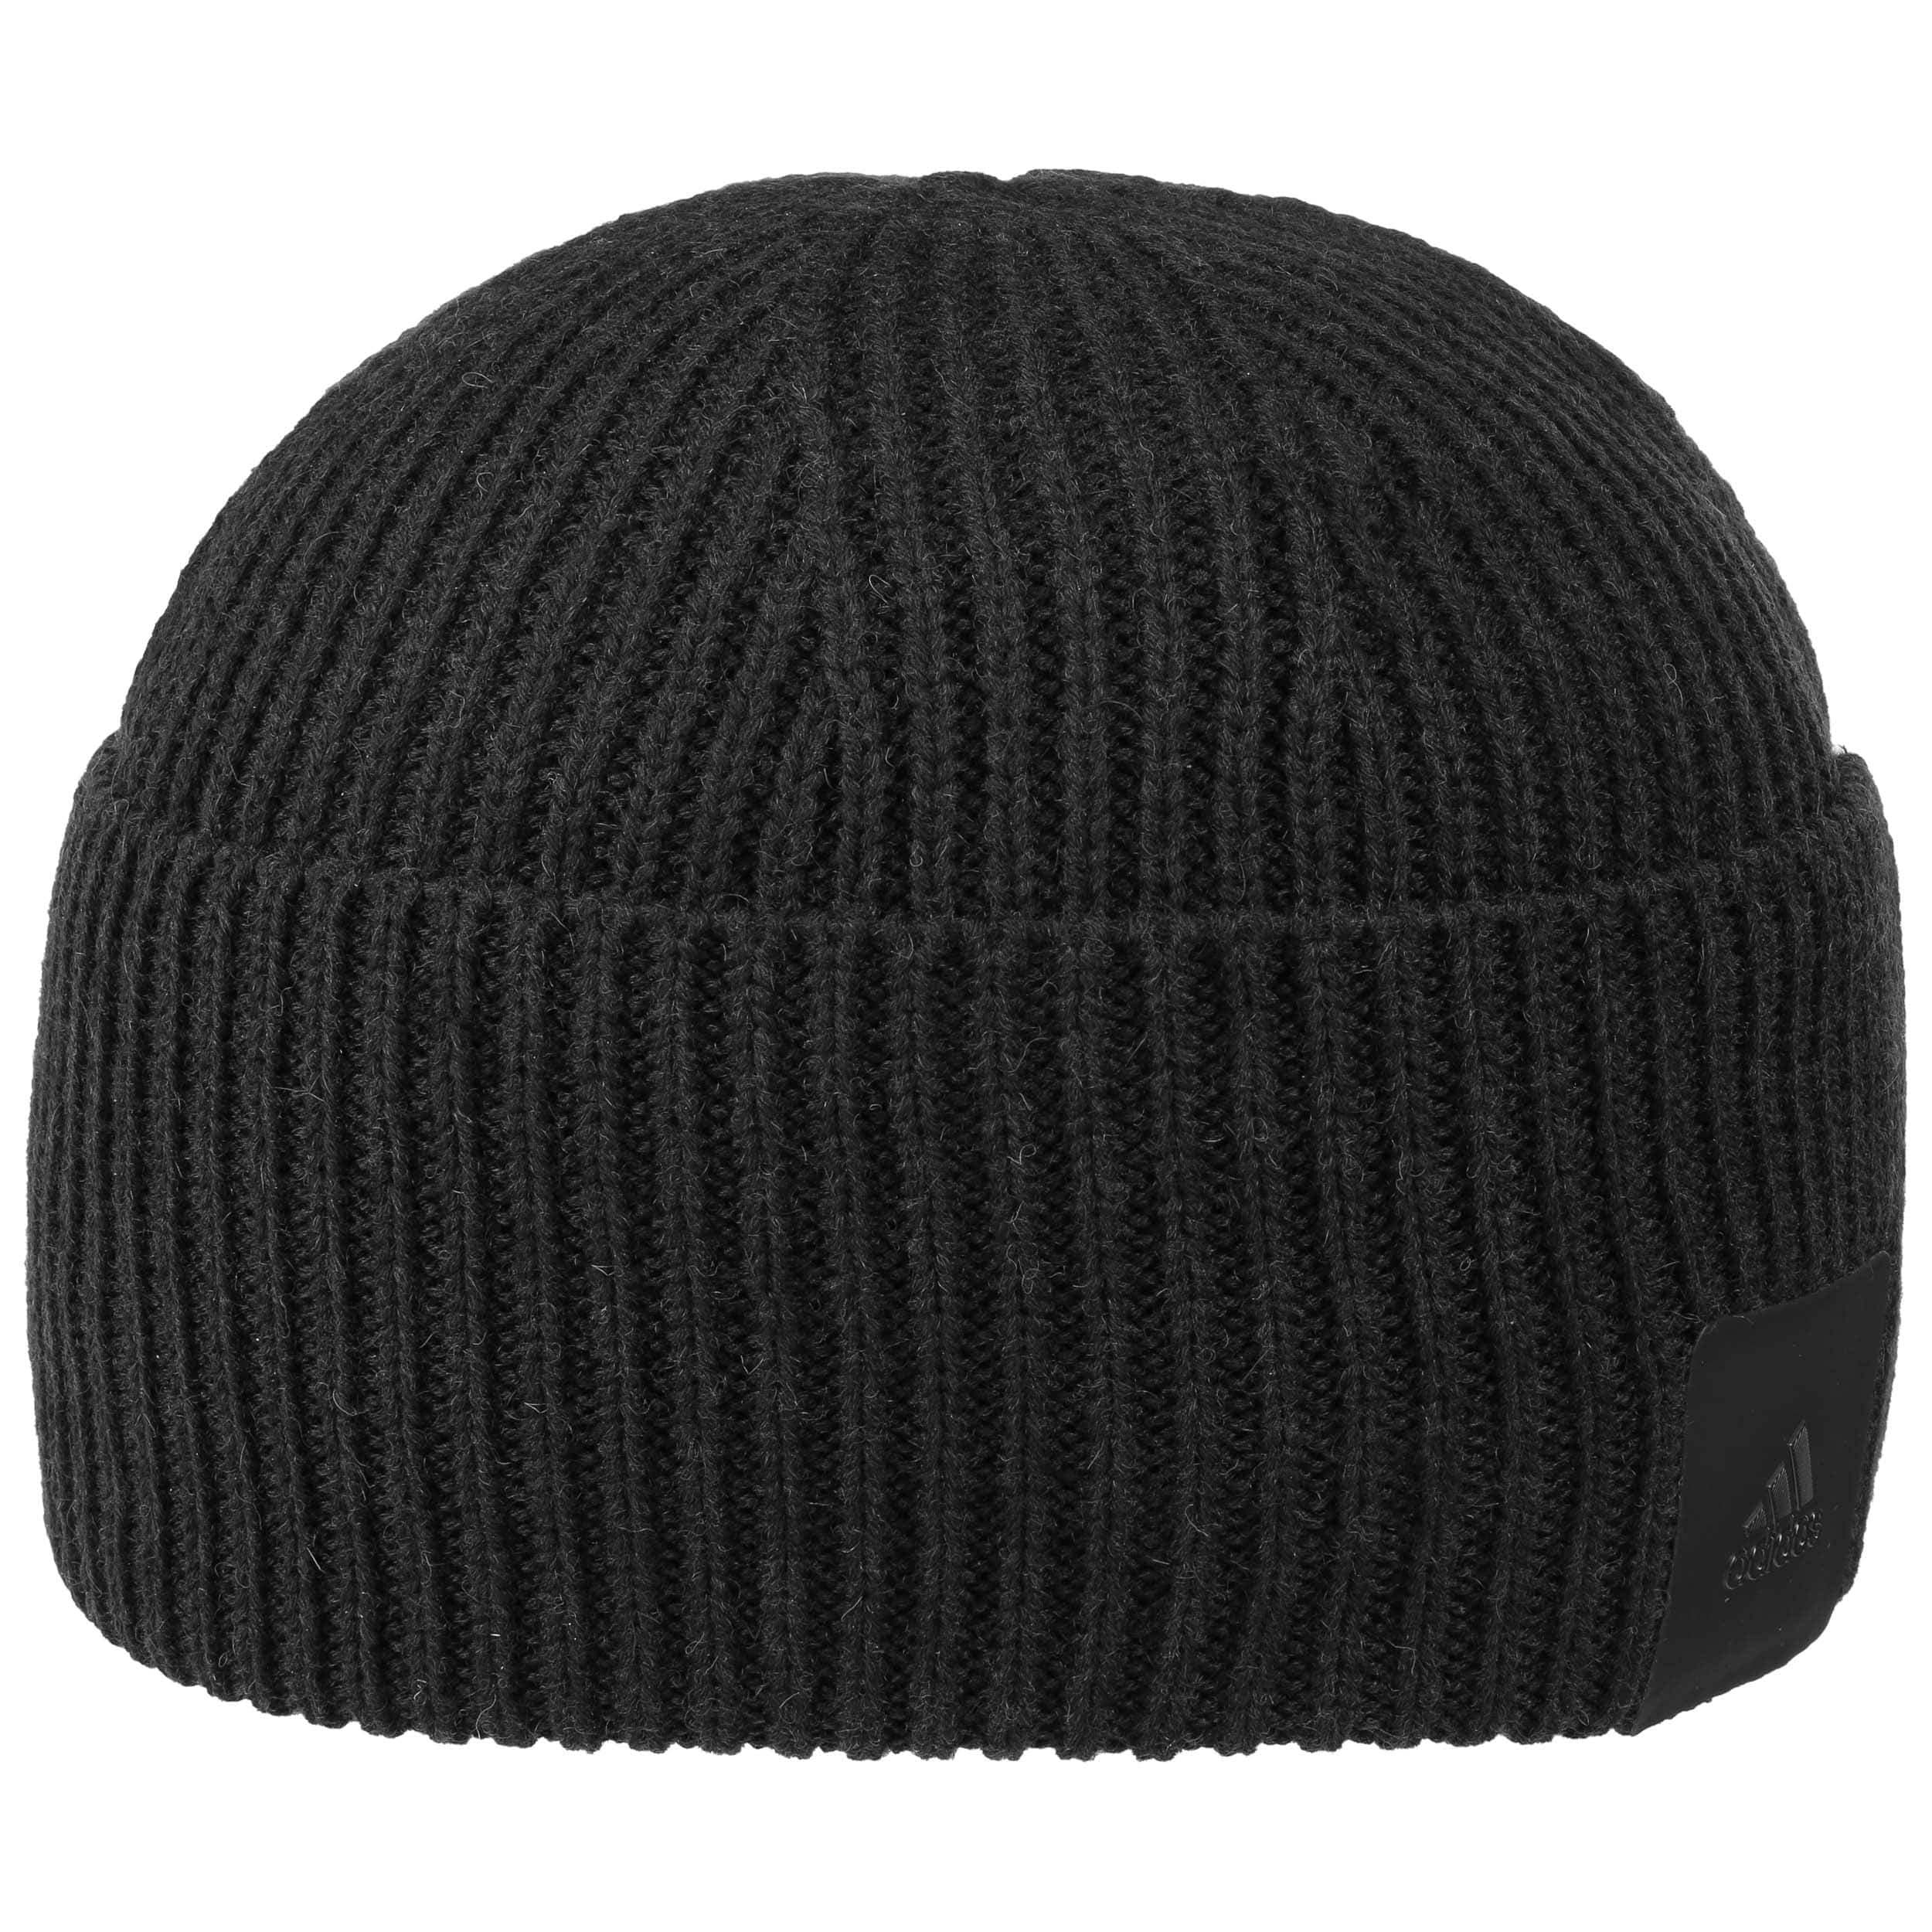 Premium Wool Beanie Hat by adidas - 27,95 £